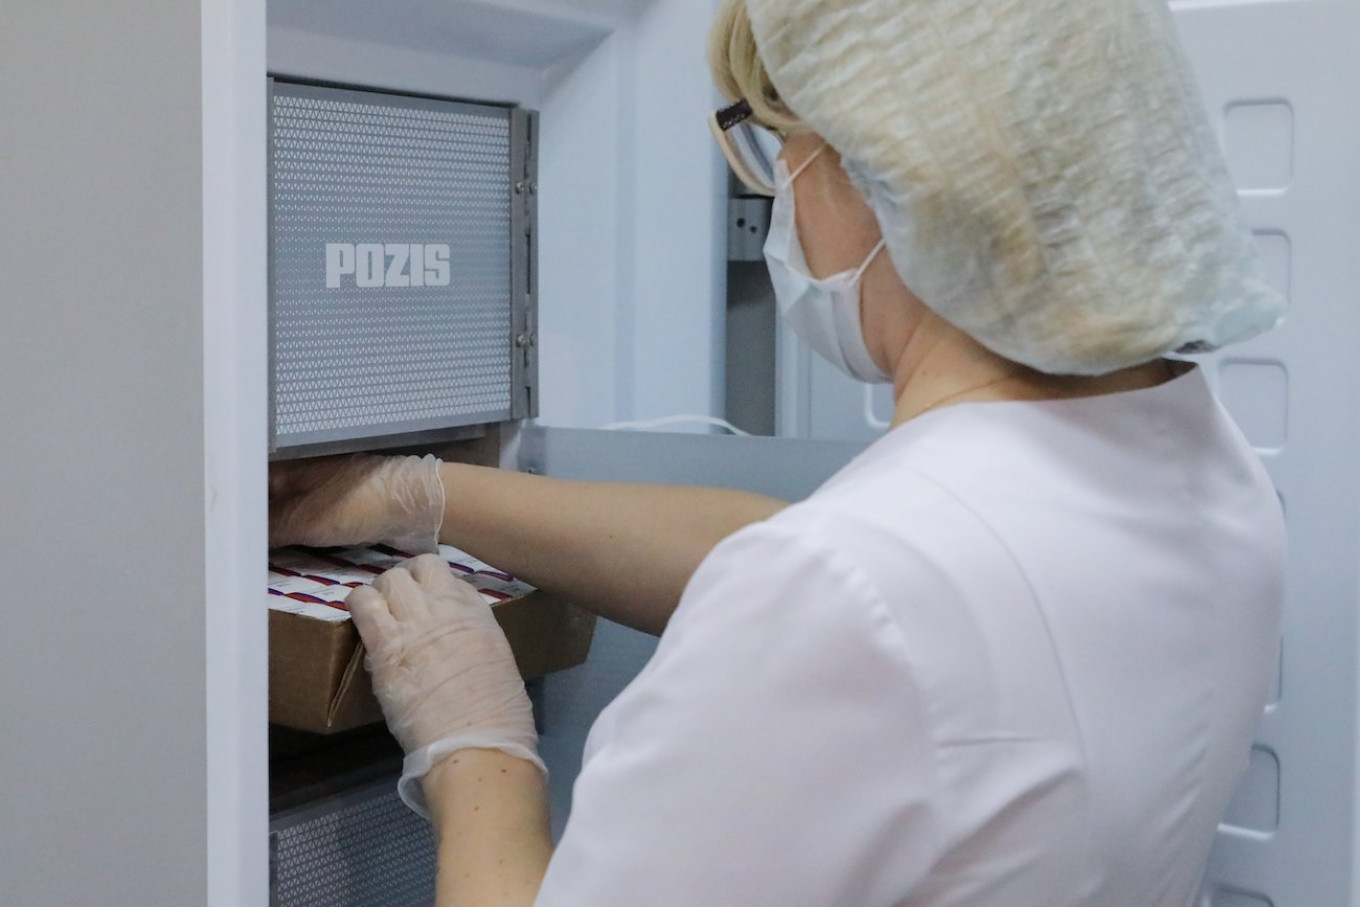 Russia Ignores Requests to Share Controversial Coronavirus Vaccine Data